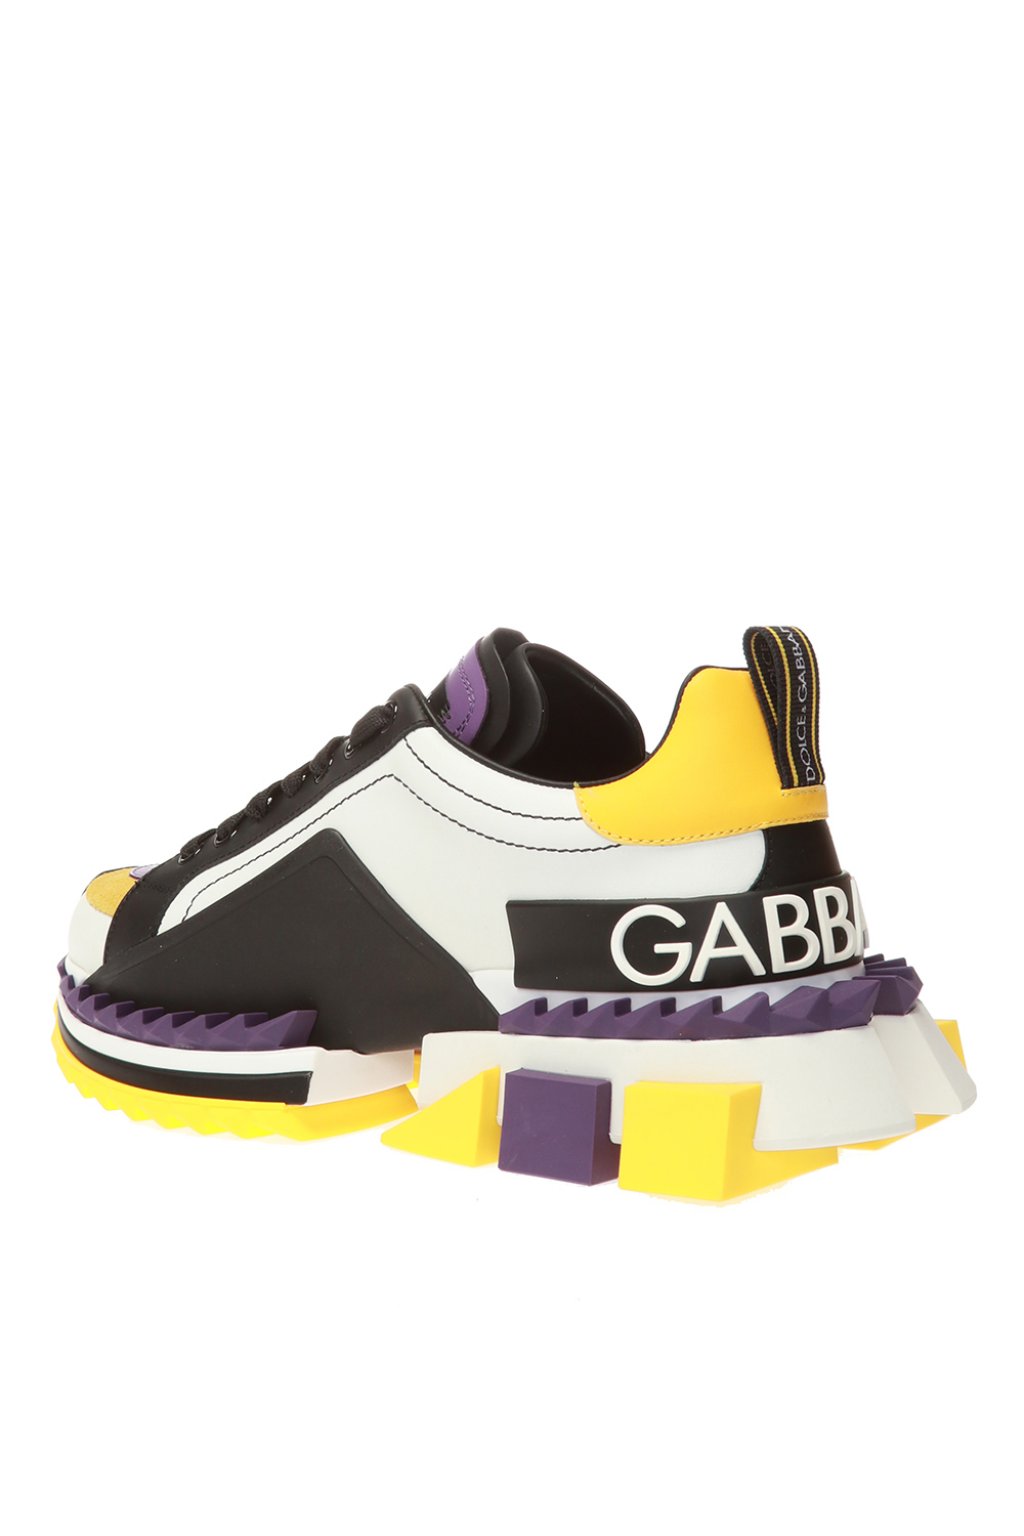 dolce gabbana king sneakers